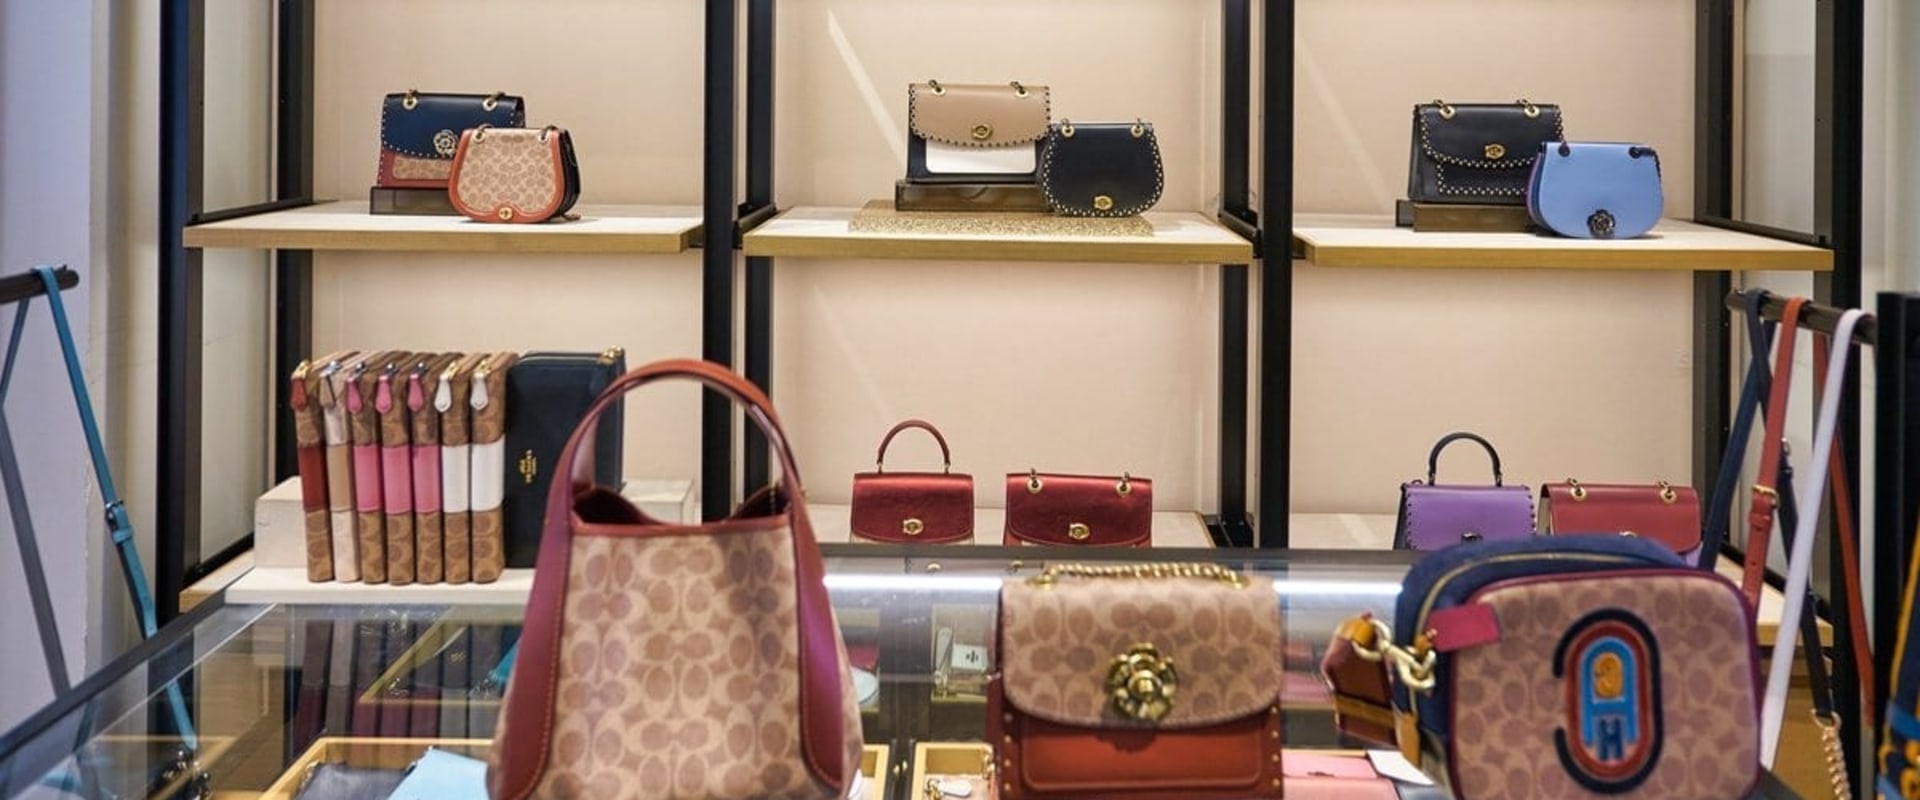 Is coach a luxury handbag?